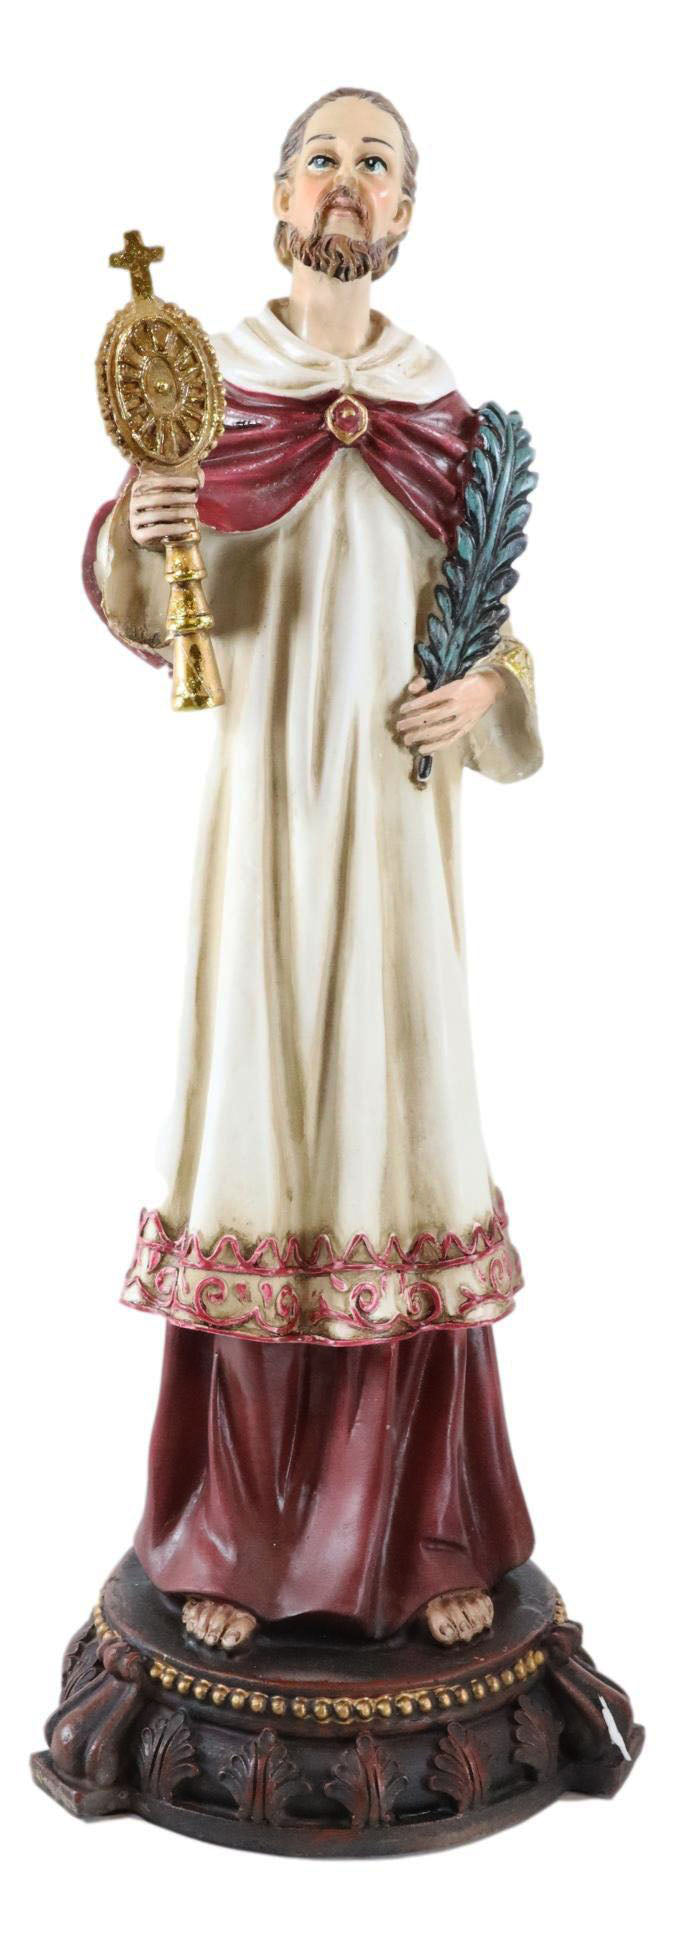 Catholic Saint Raymond Nonnatus With Monstrance and Martyr Palm Branch Figurine